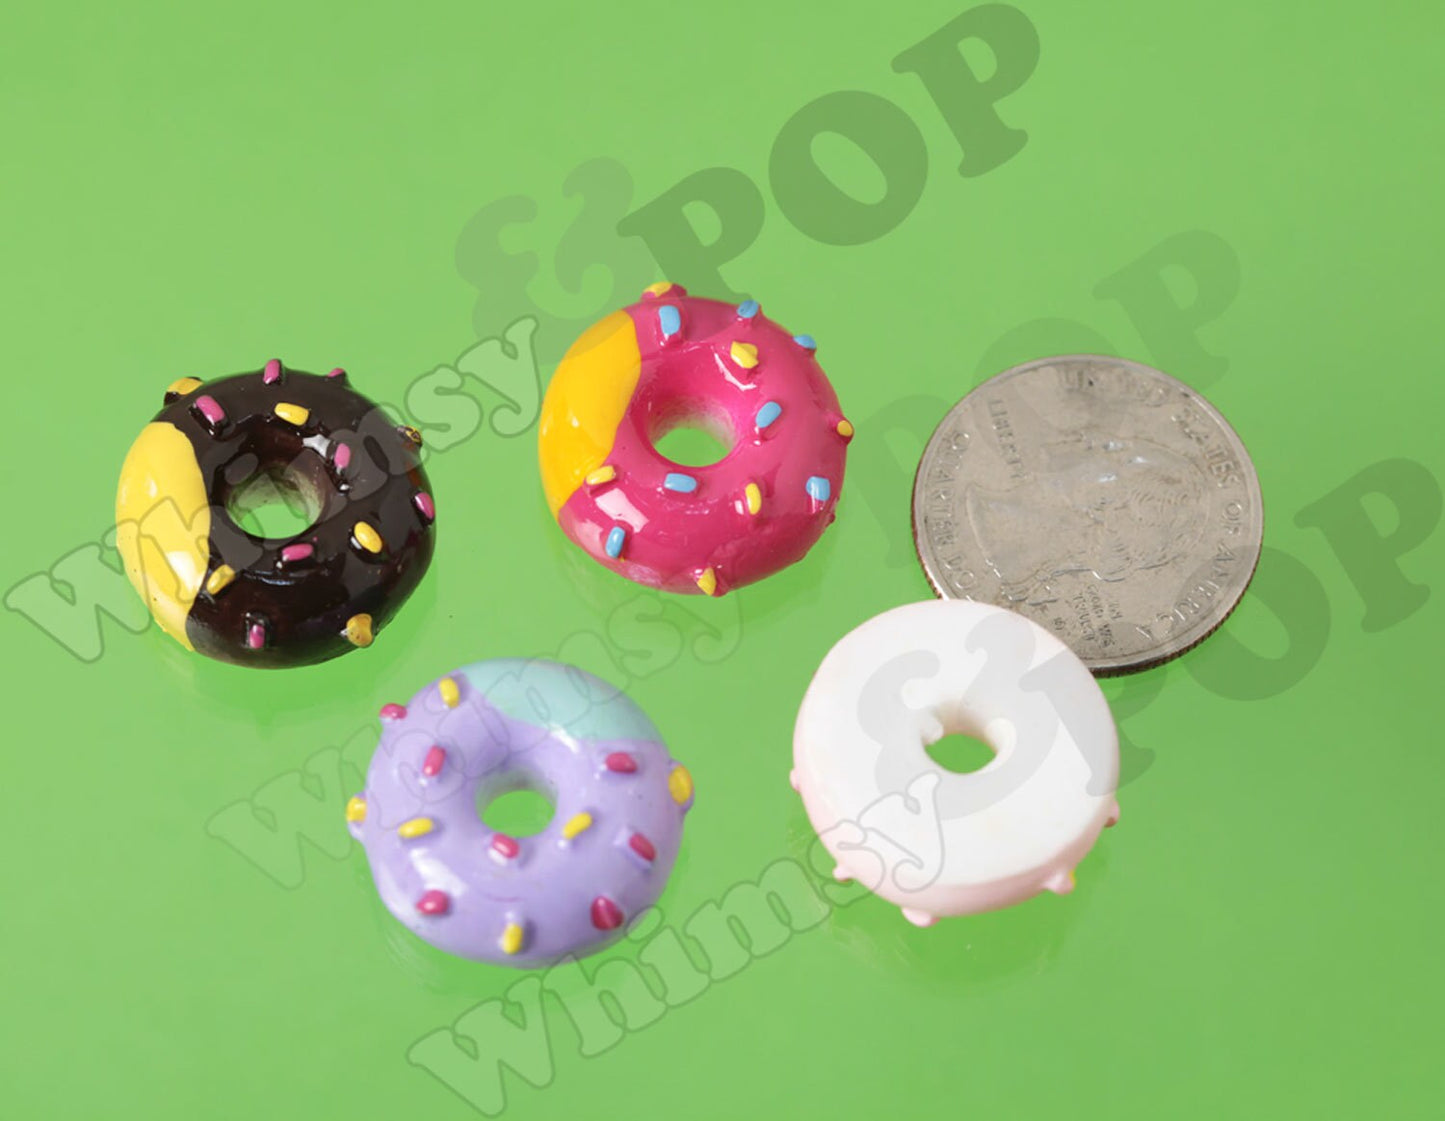 NEW Kawaii Donuts, Sprinkle Icing Doughnut Donut Decoden Resin Flatback Charms, Flat Back Embellishment, Donut Cabochons, 21mm (R5-031)